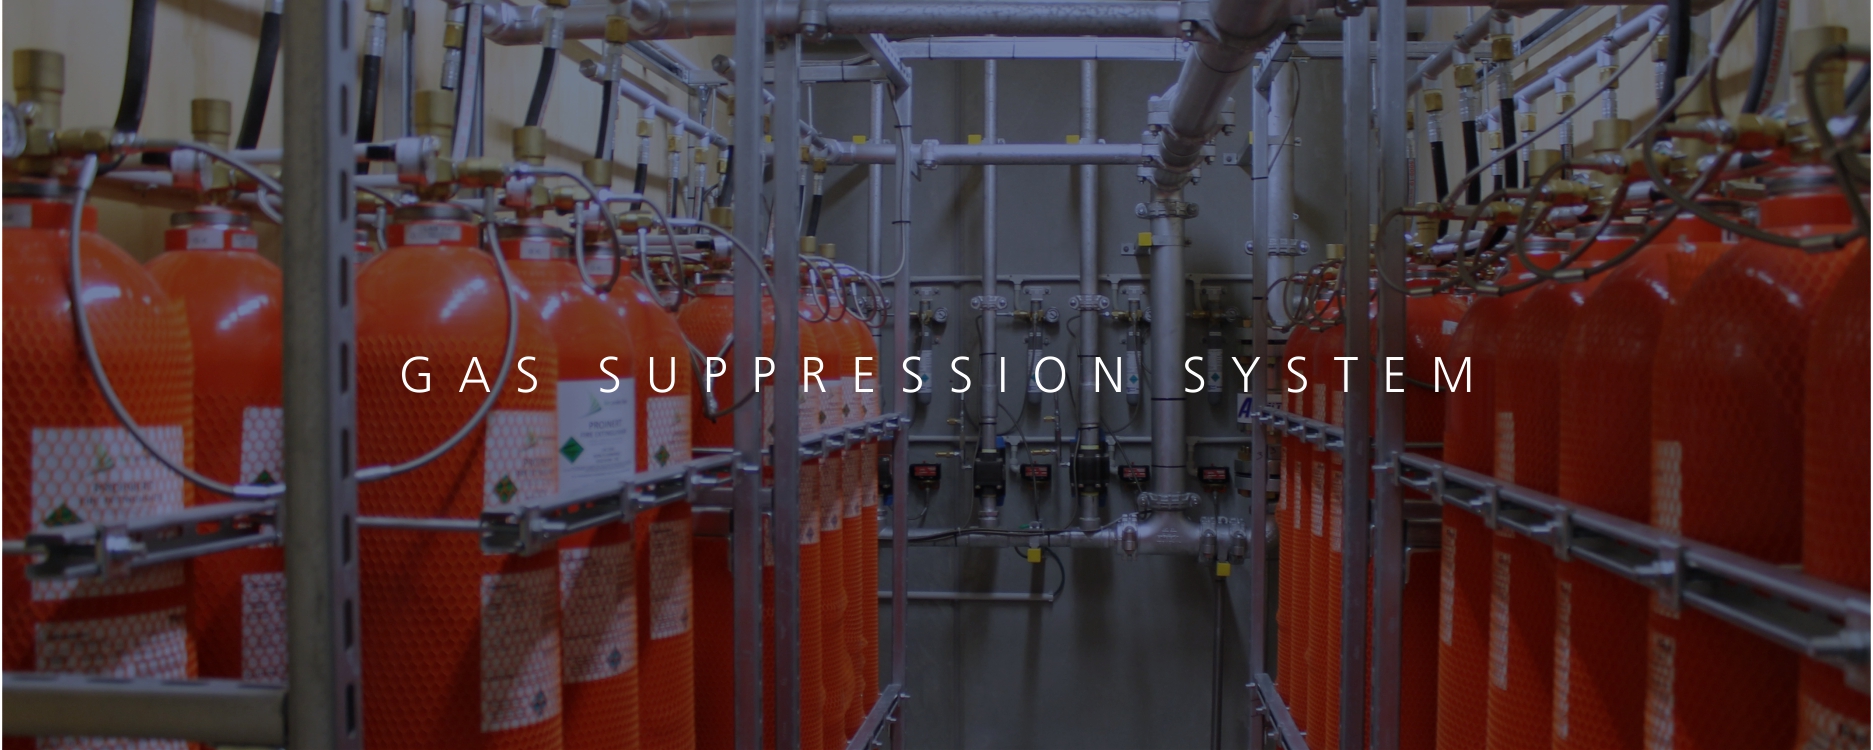 Gas- Suppression- System 